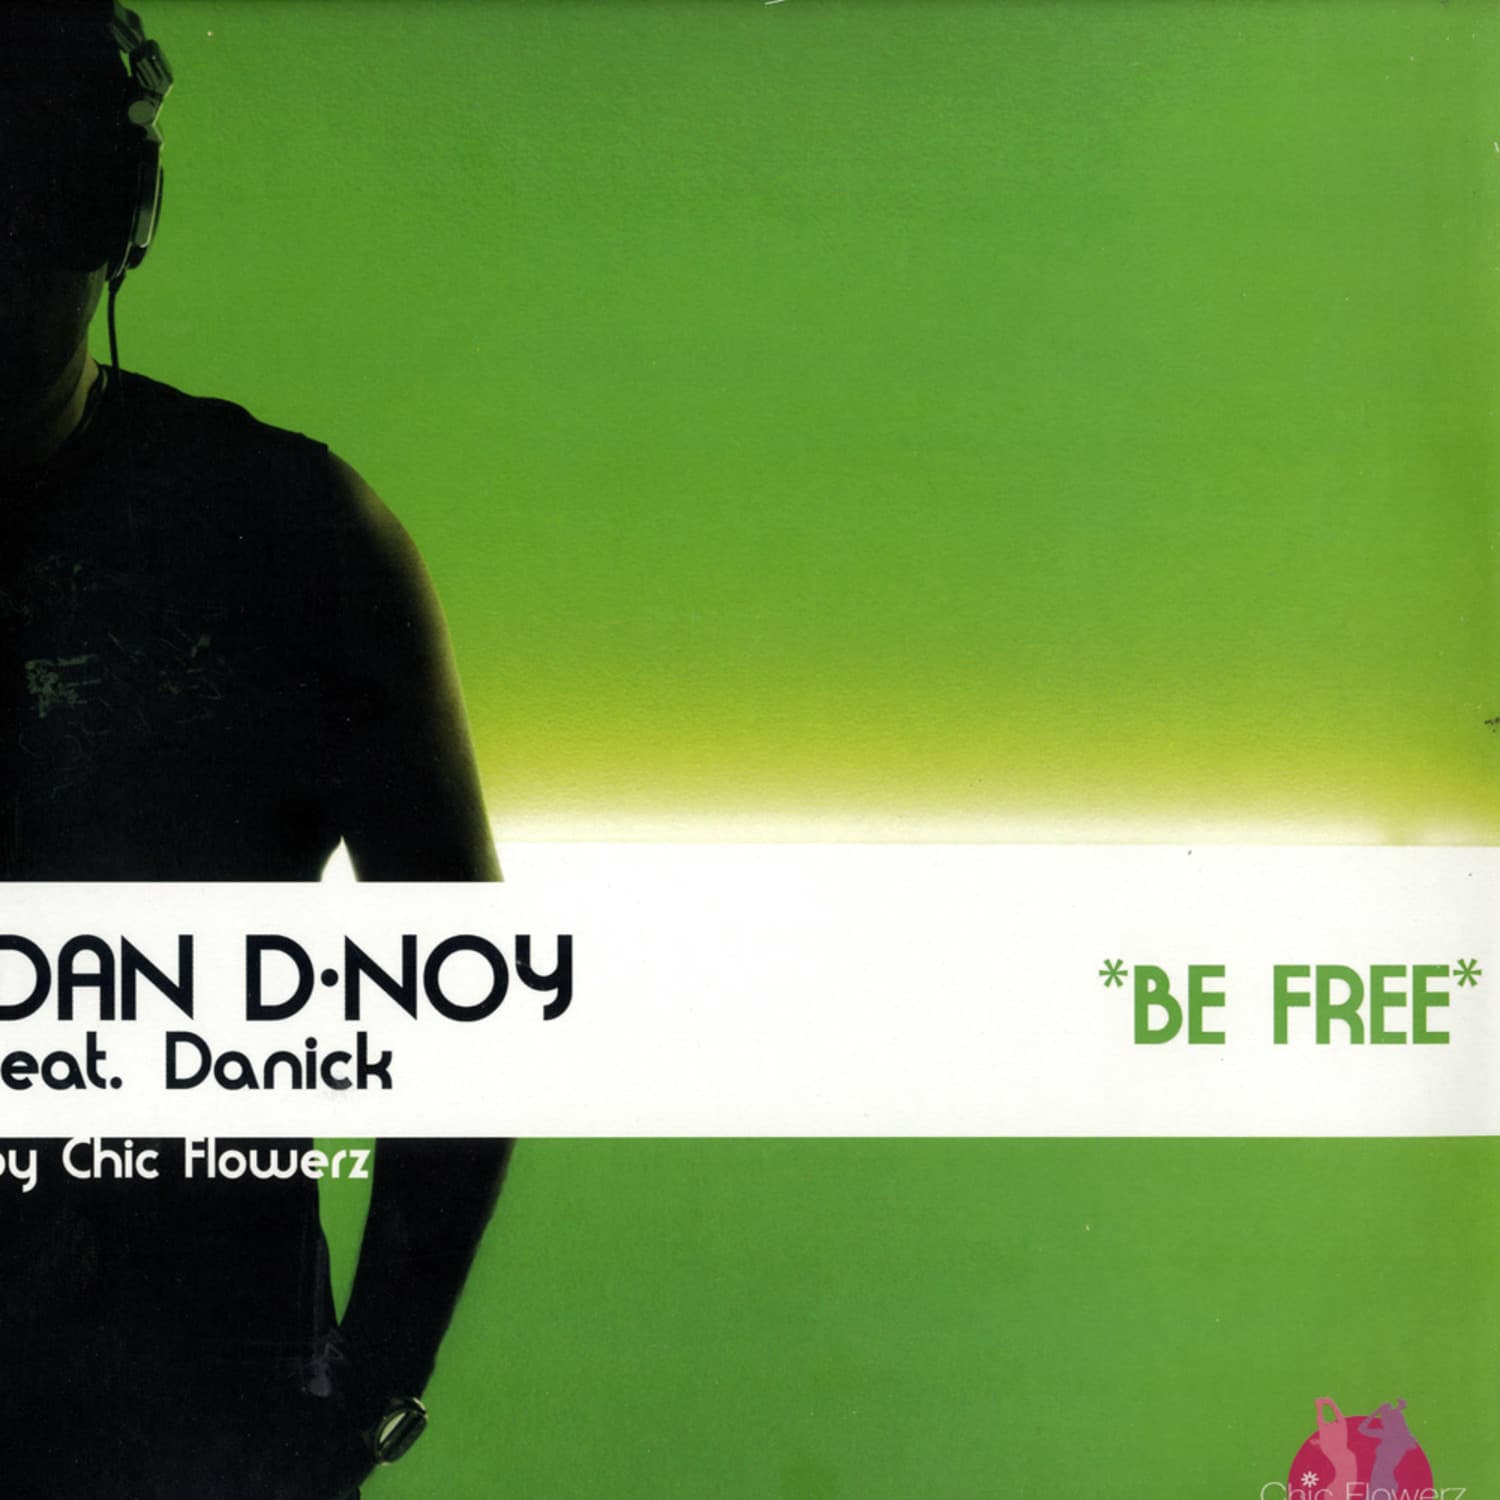 Dan D-noy feat. Danick - BE FREE